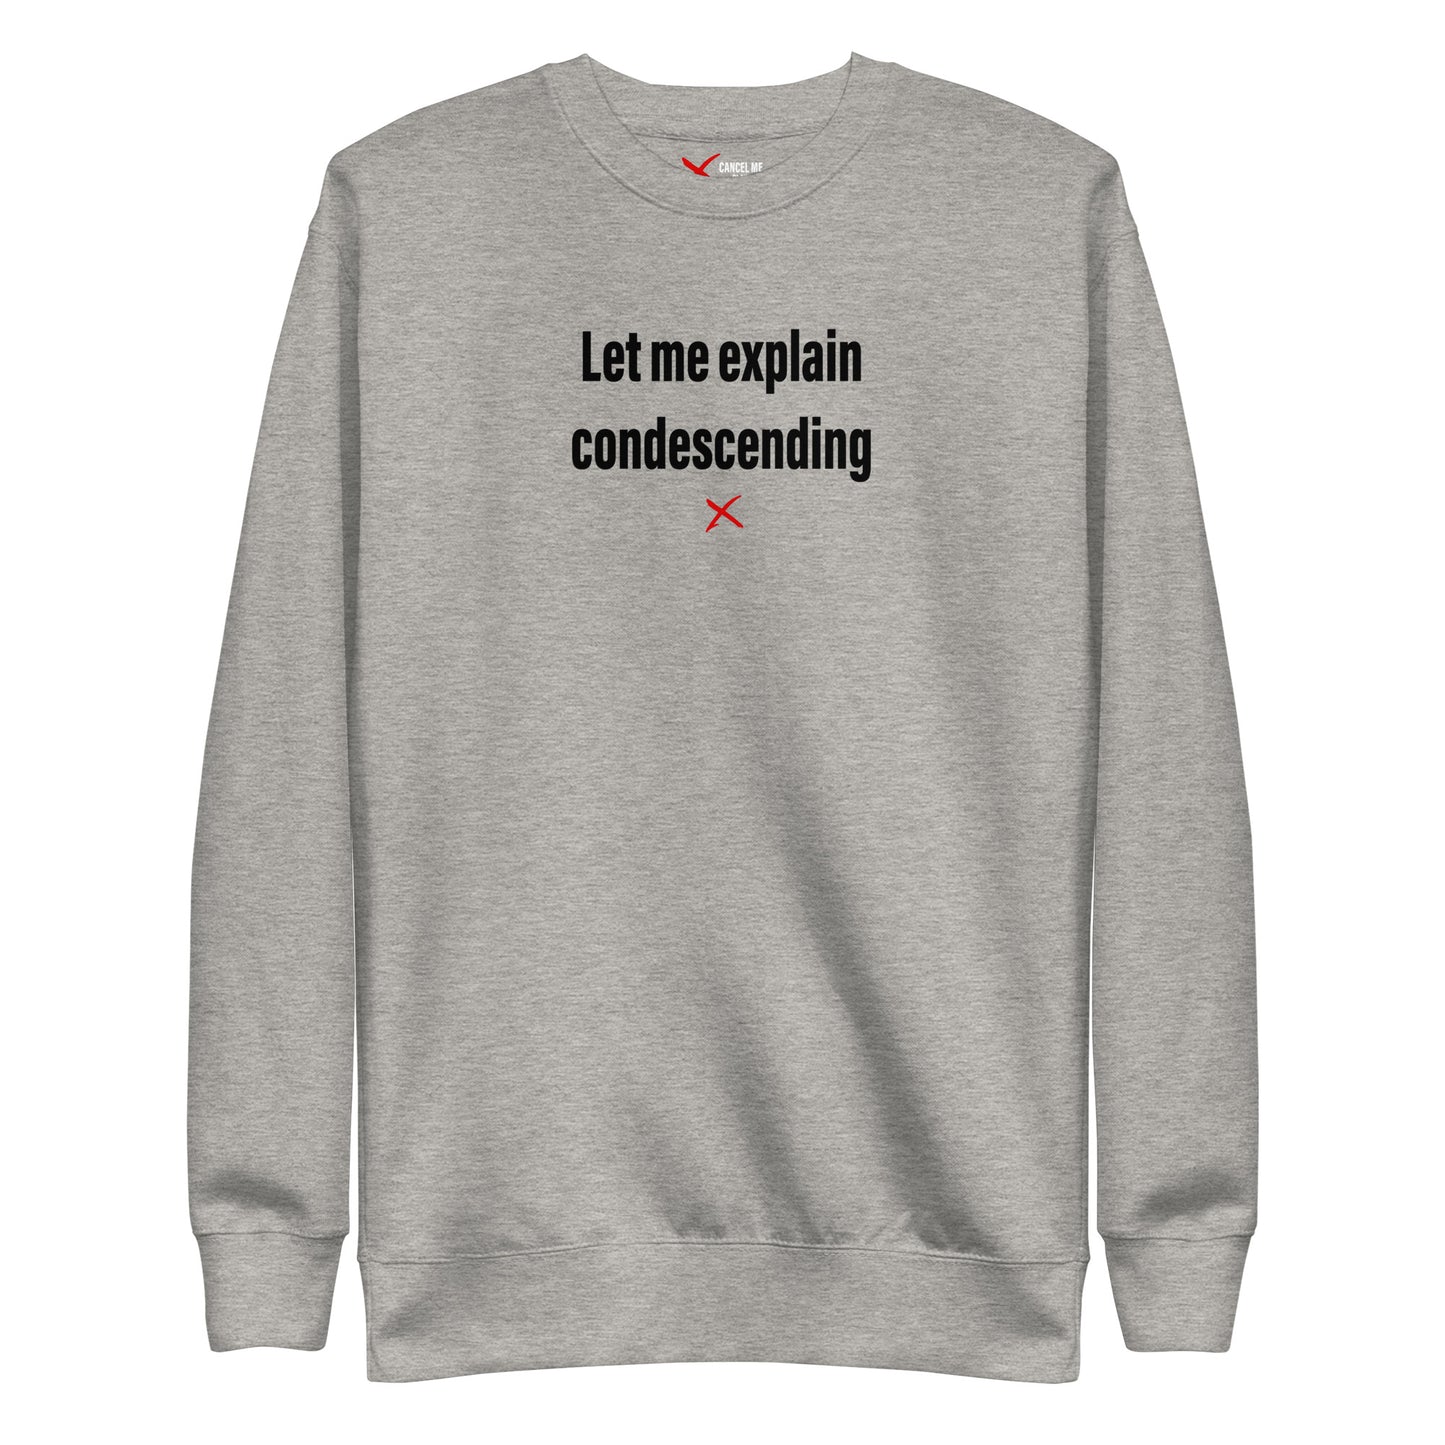 Let me explain condescending - Sweatshirt